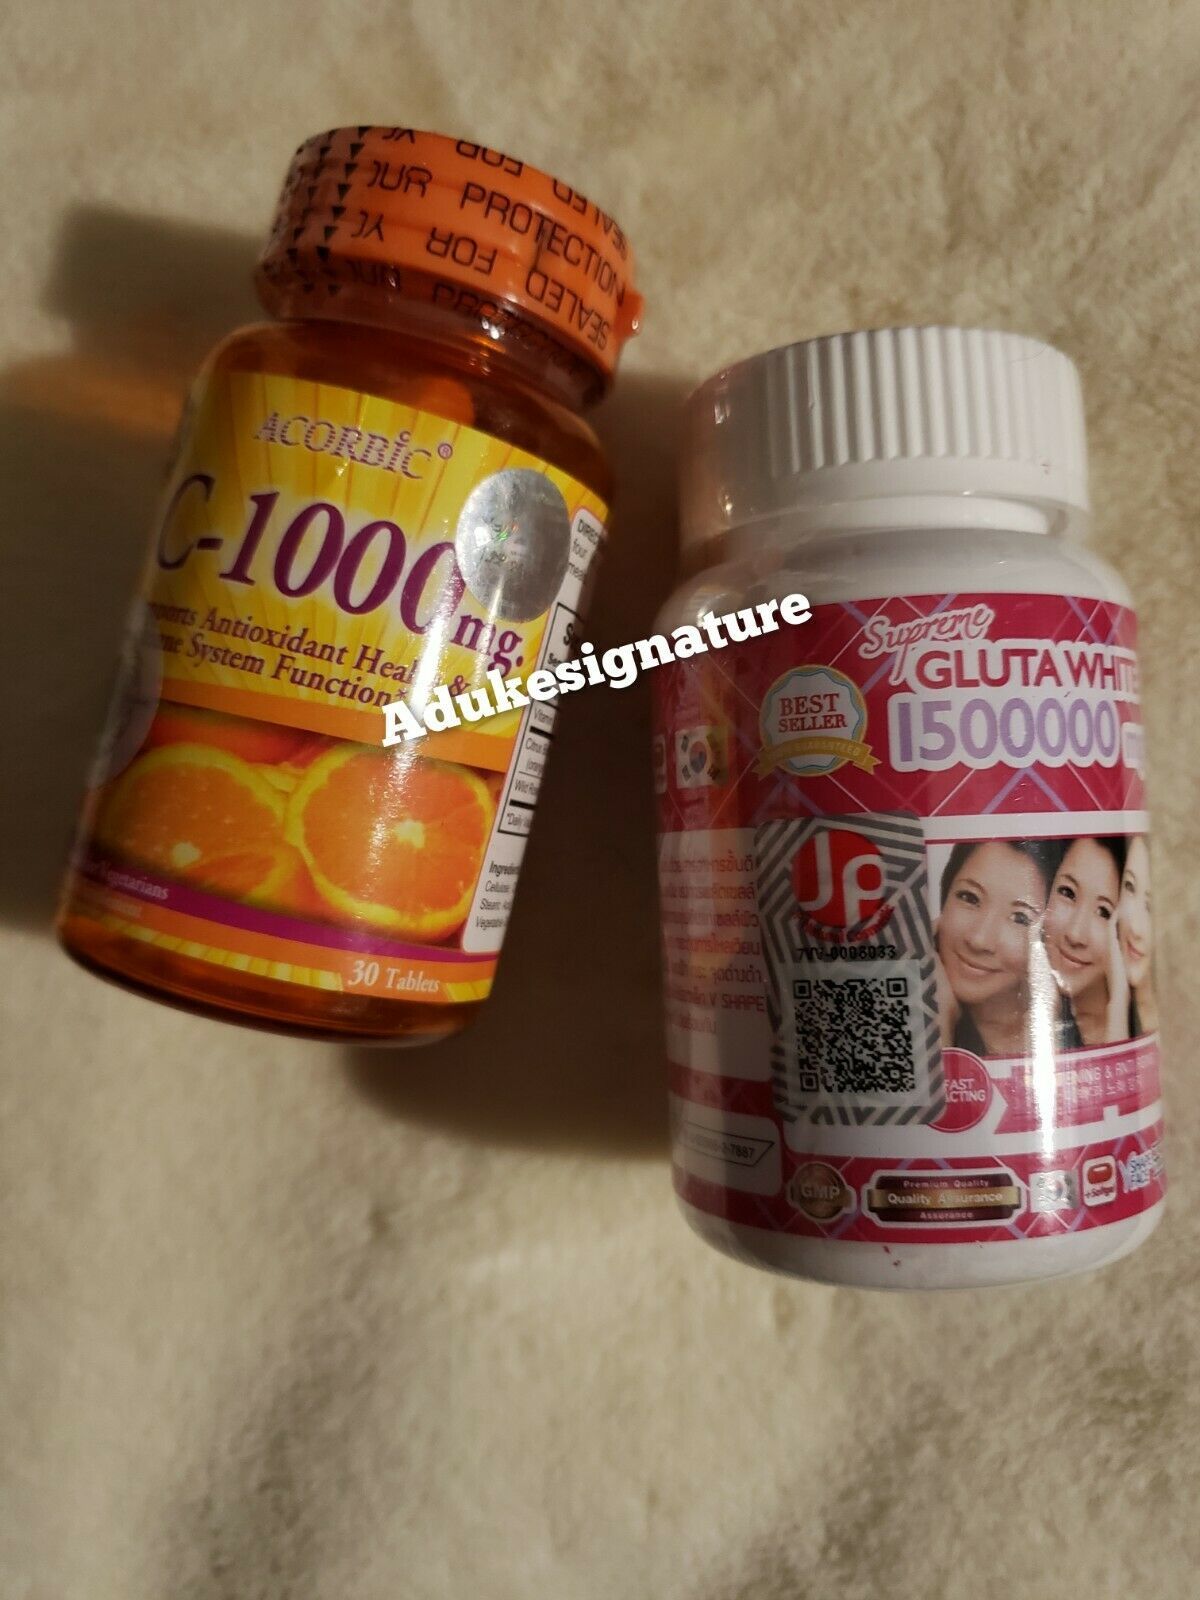 Supreme Gluta White Glutathione 1500000mg and Acorbic Vitamin C Antioxidant tabs